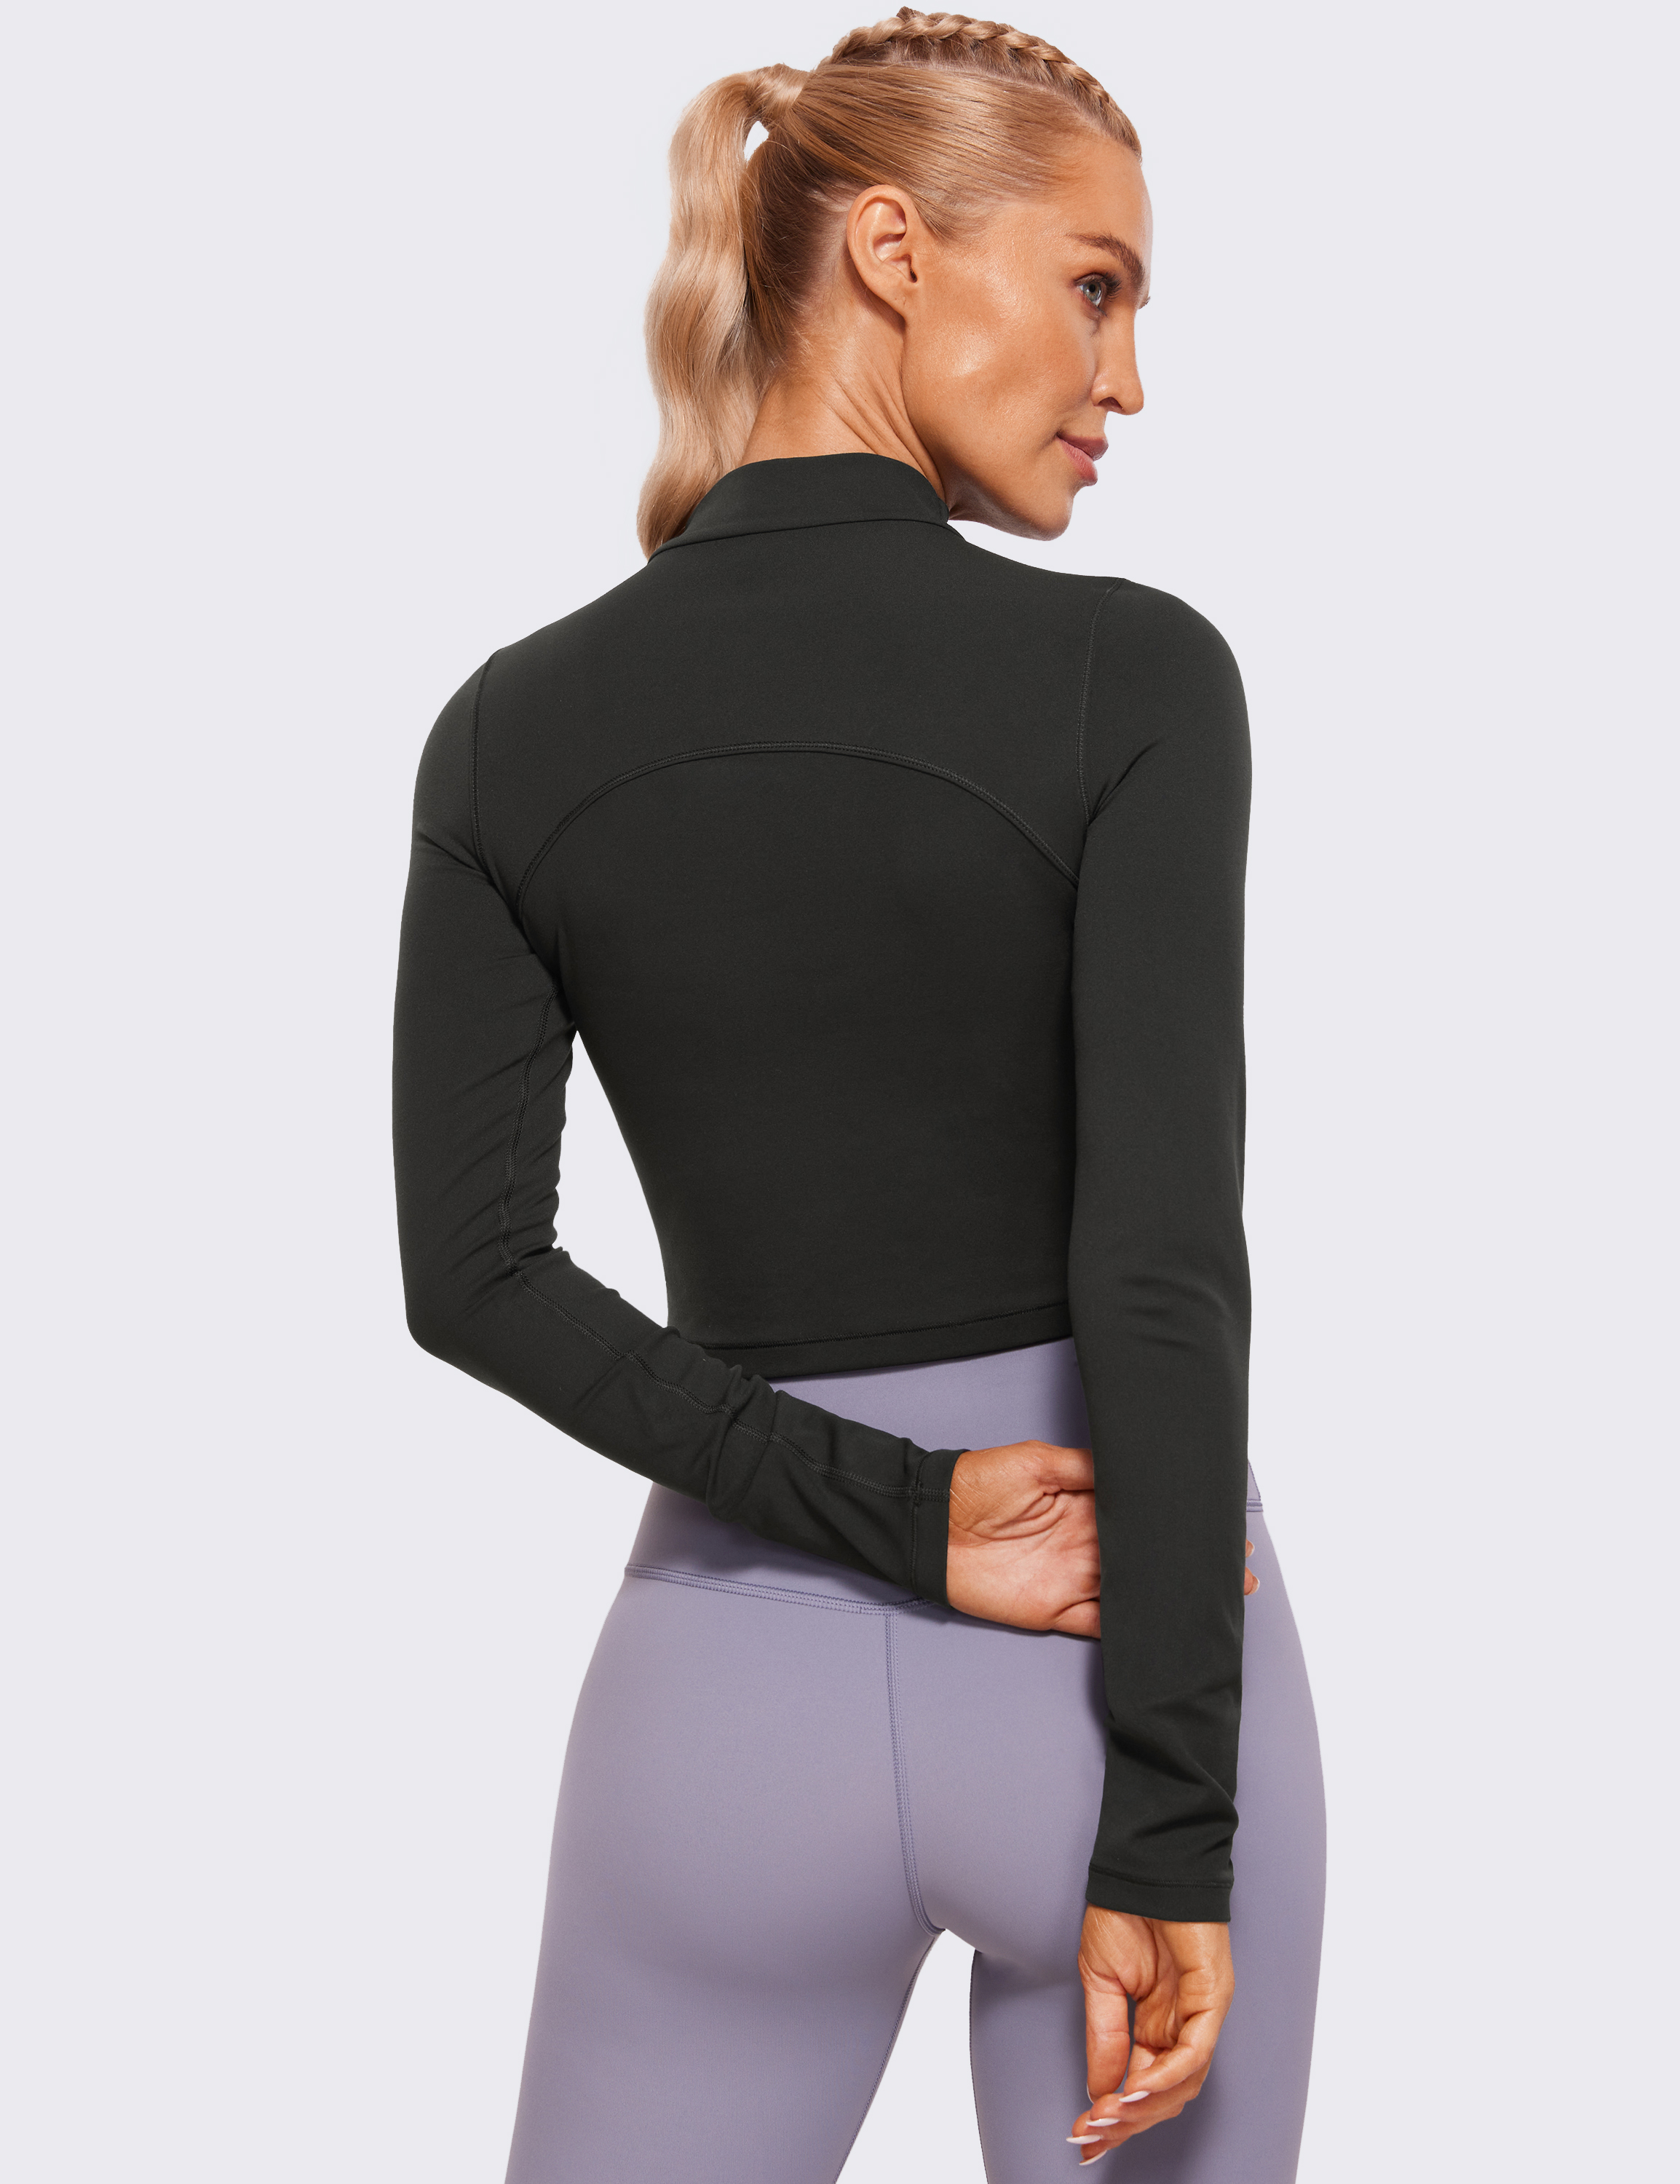 CRZ YOGA Butterluxe Long Sleeve Crop Tops for Women Slim Fit